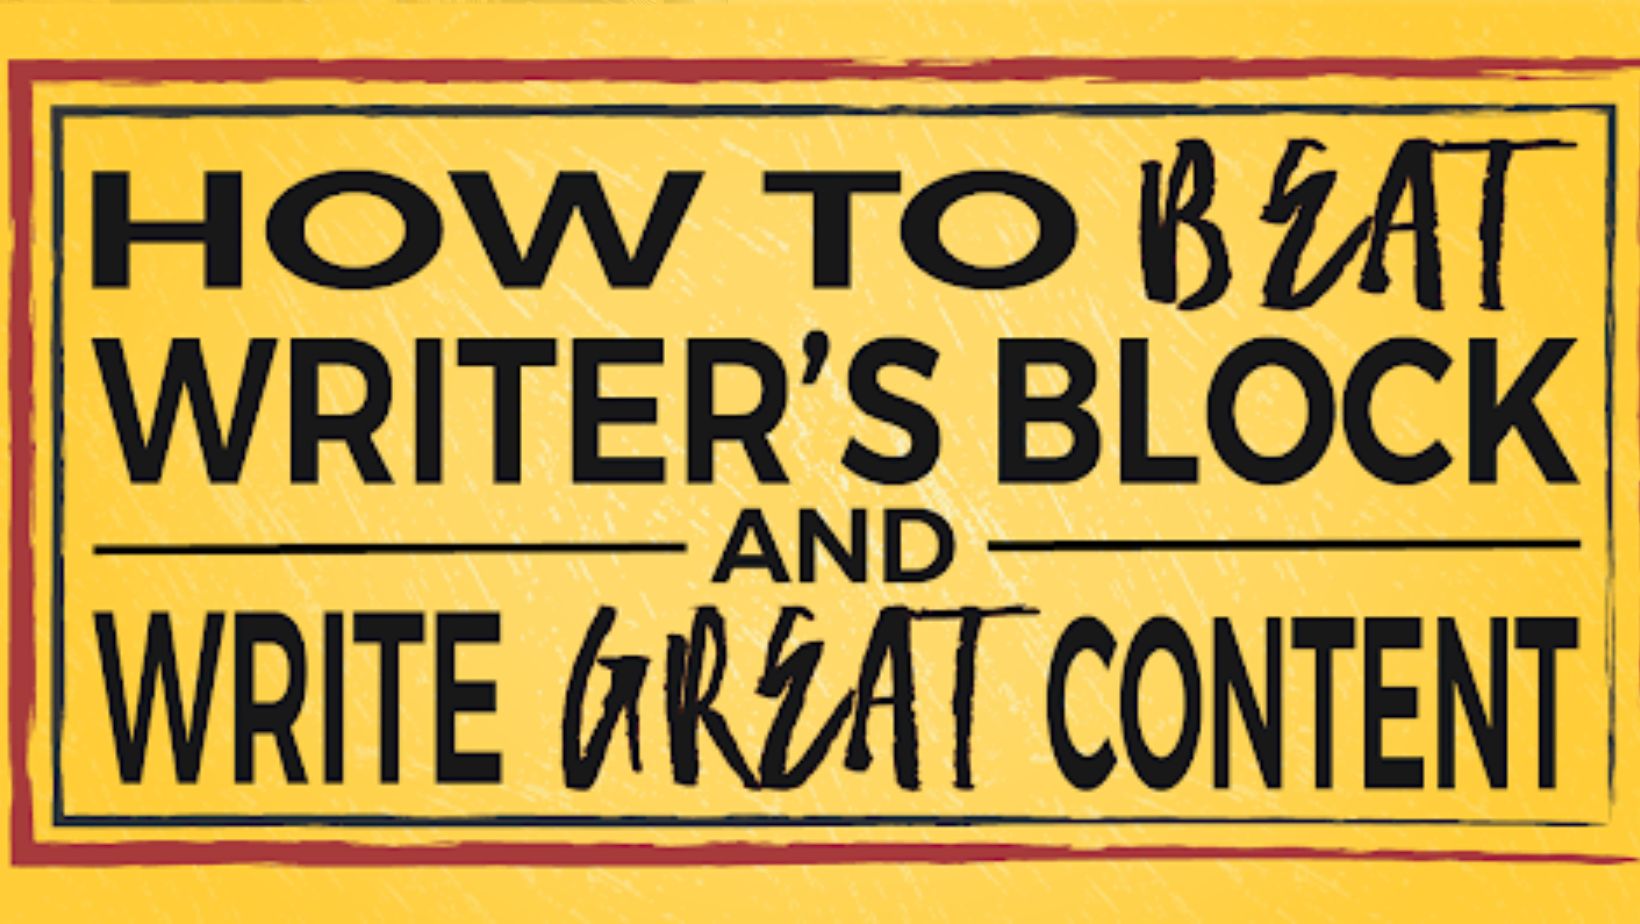 7 amazing ways to beat writers block zubatecno.com